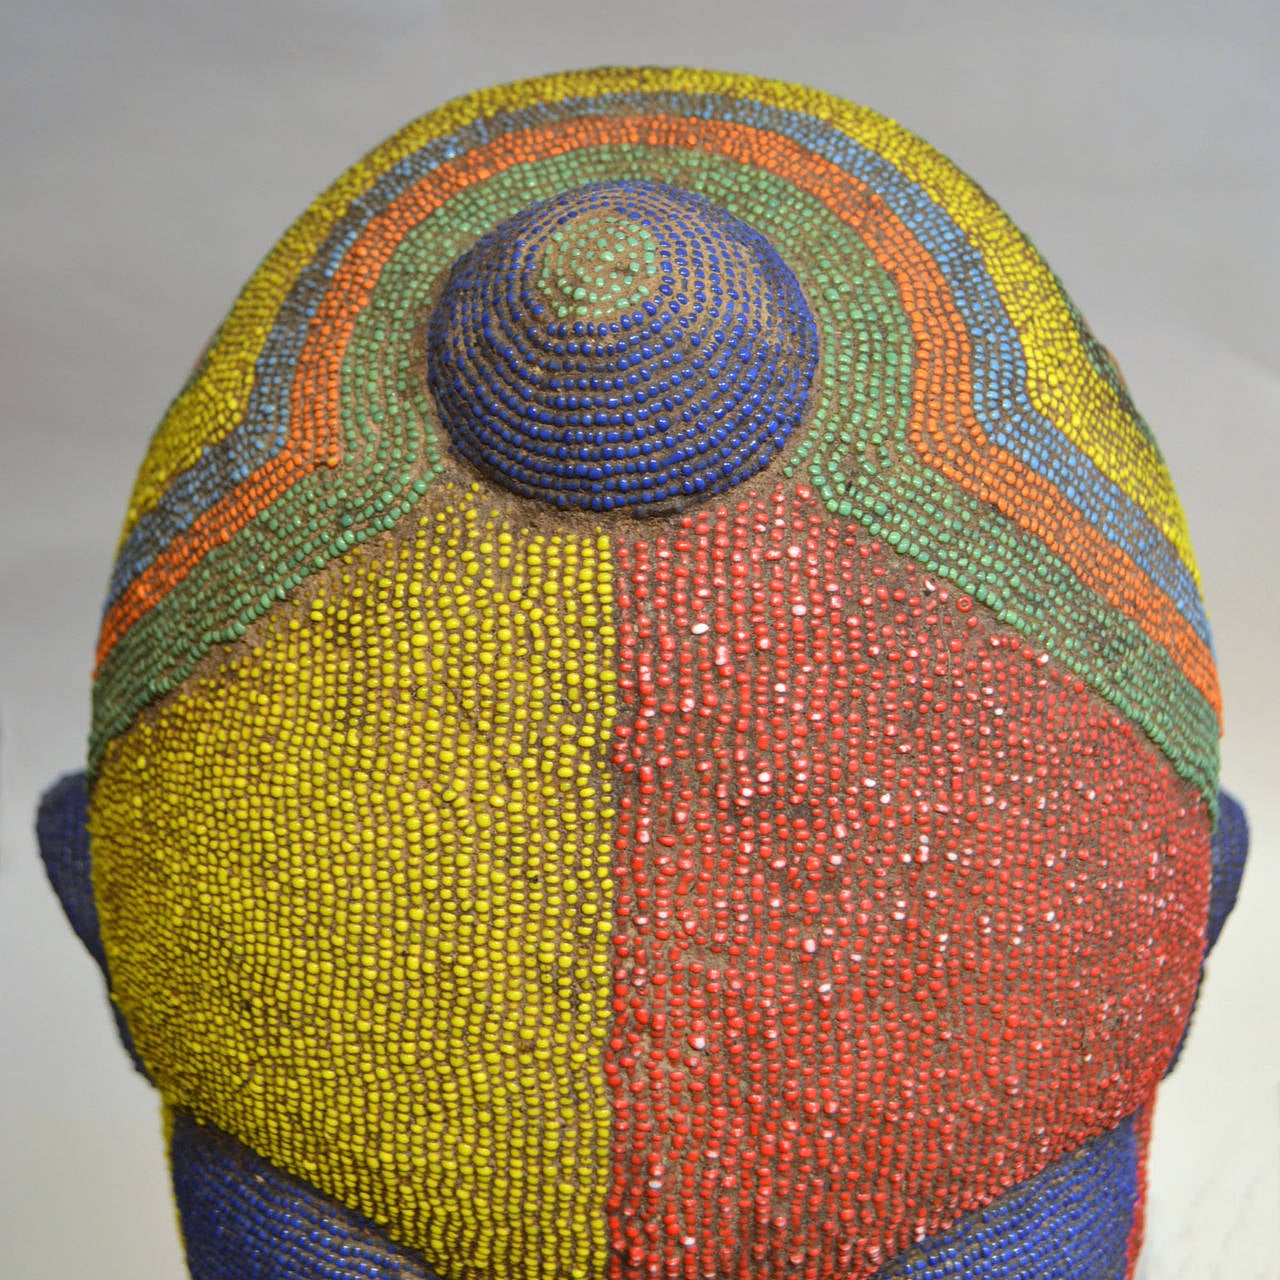 Terracotta Large Female Head Sculpture in Colored Beads, Nigeria